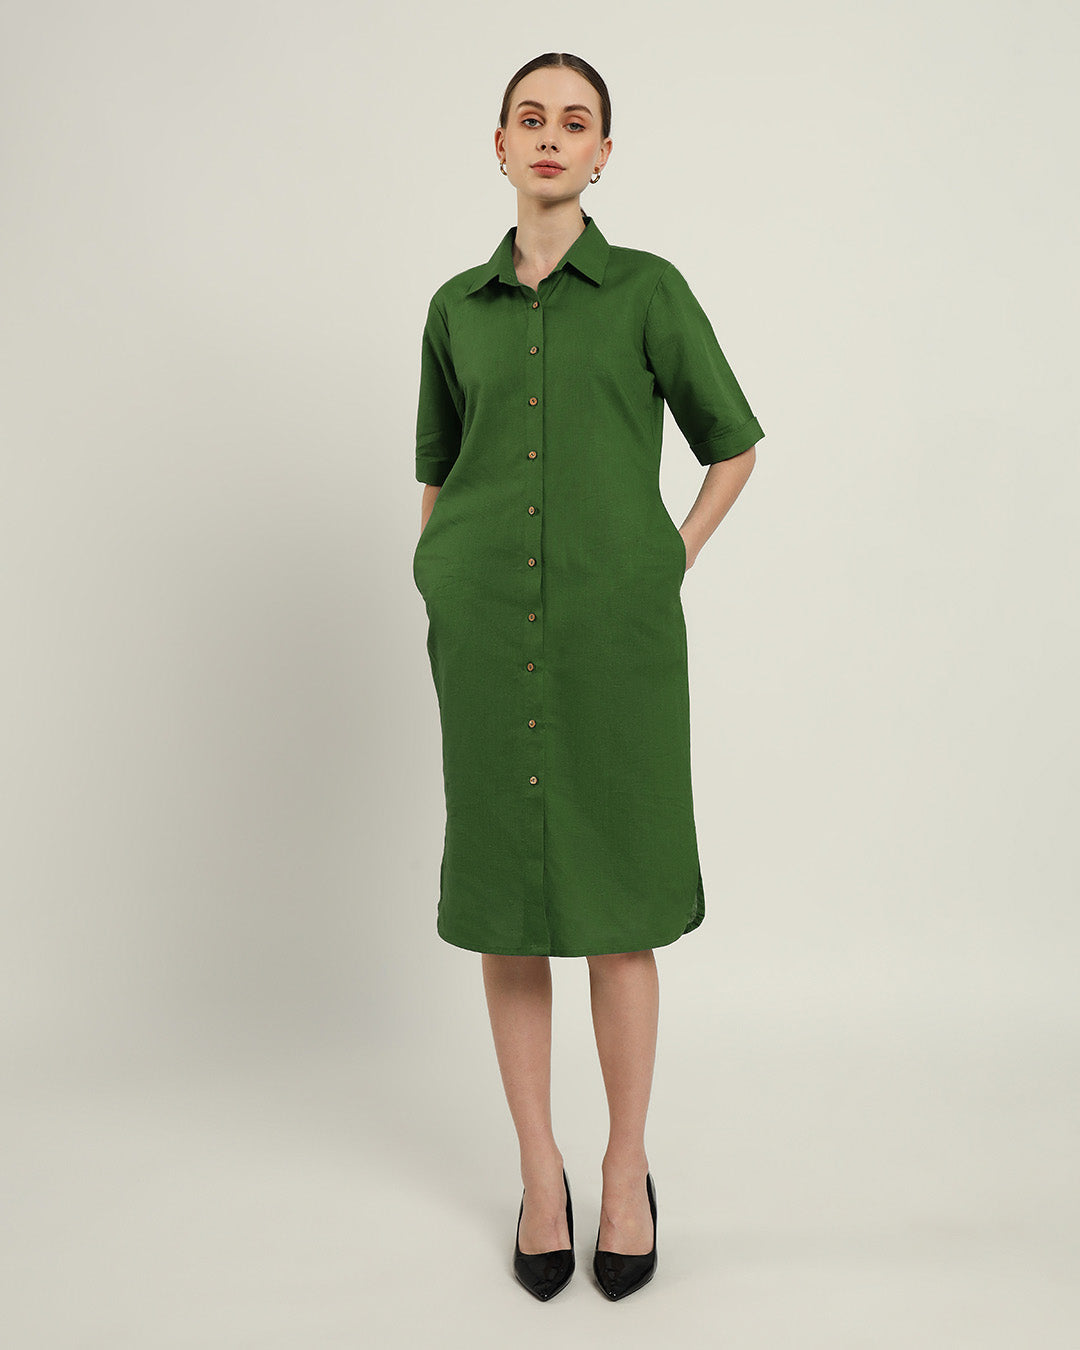 The Tampa Emerald Dress